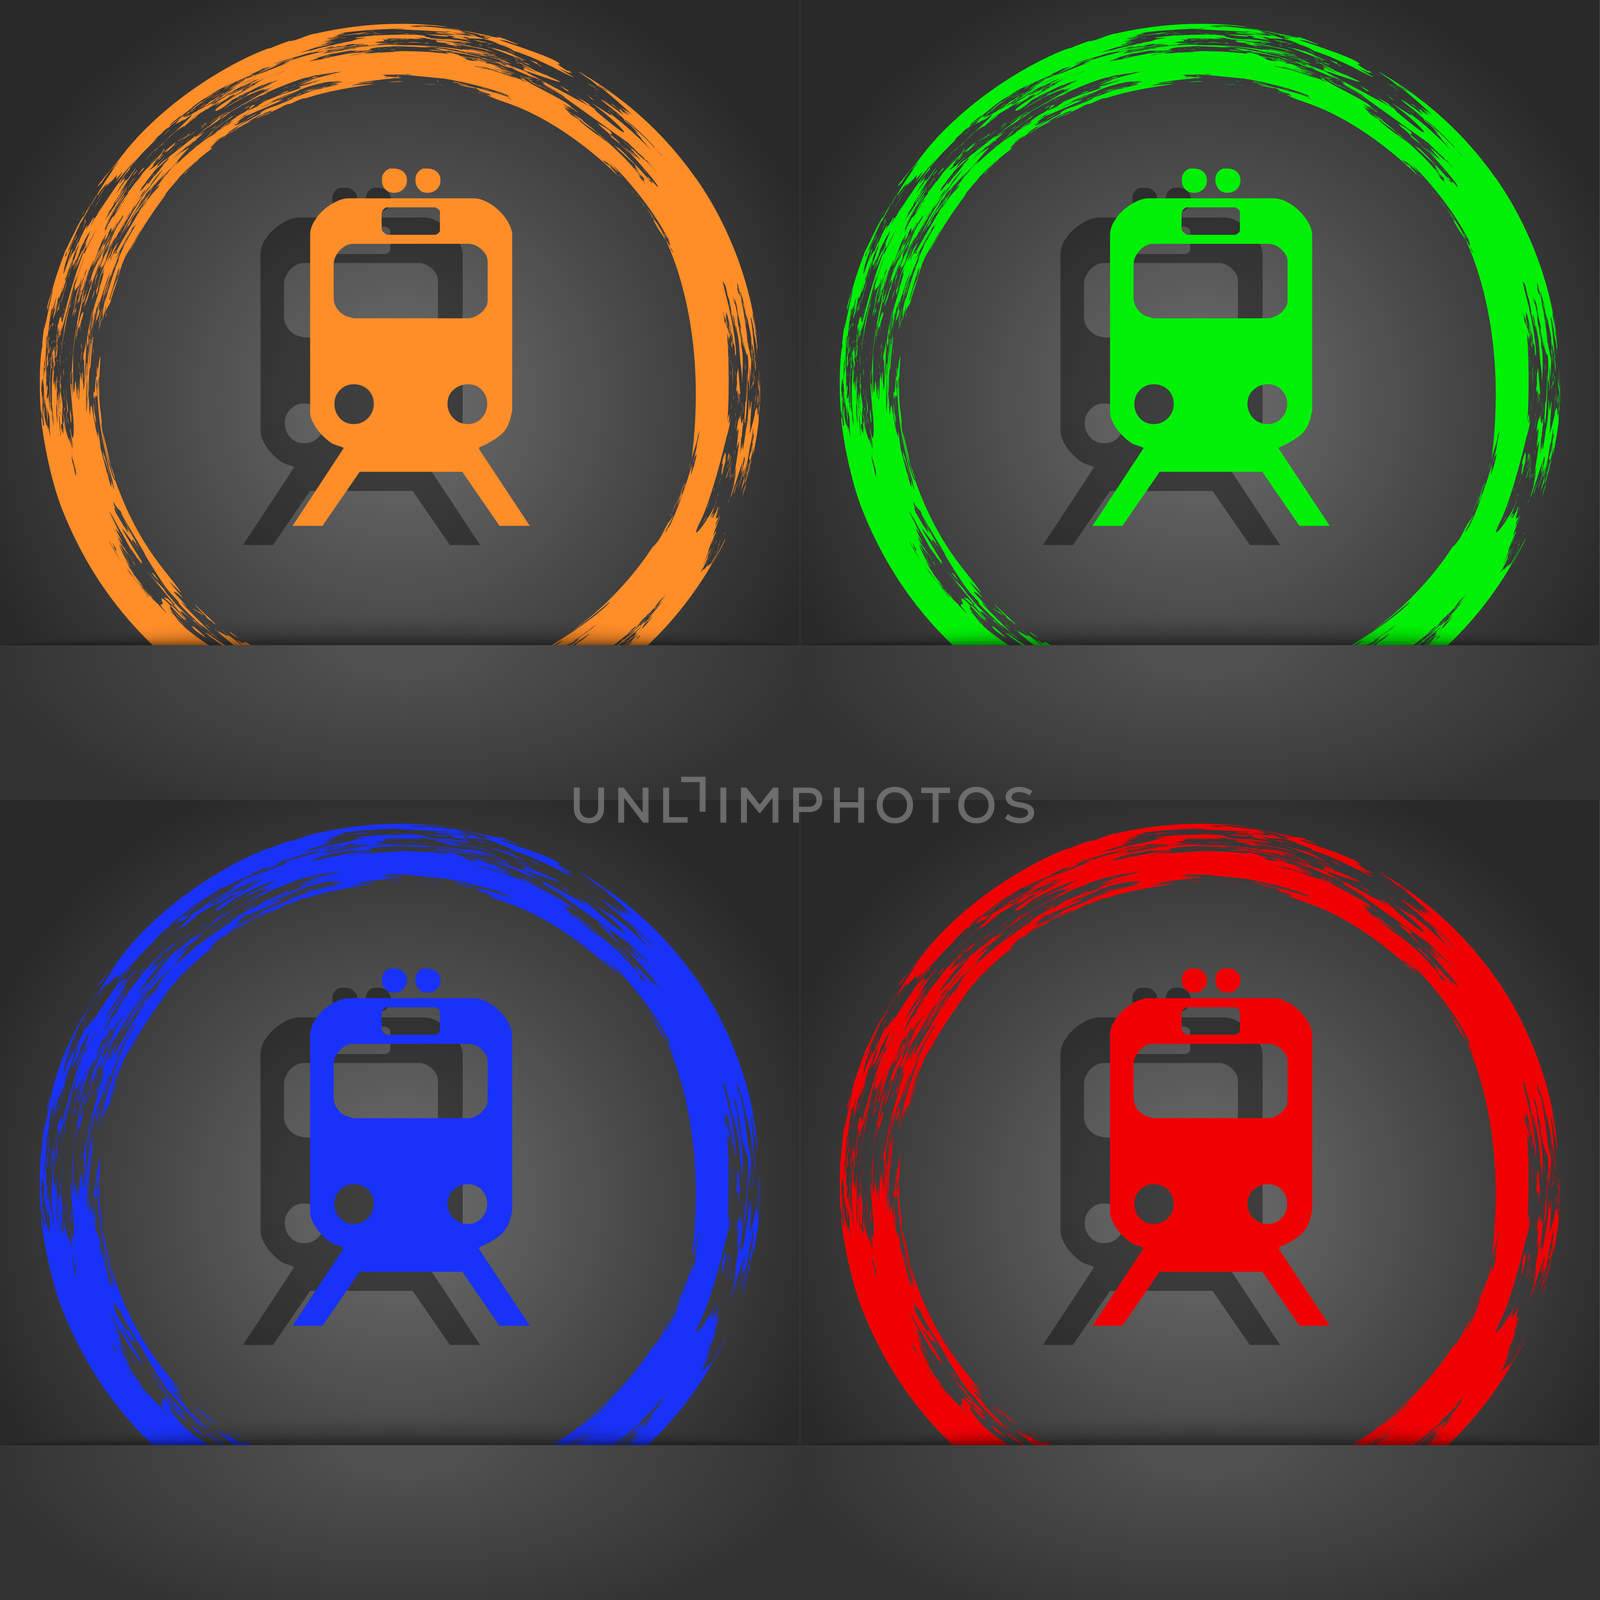 train icon symbol. Fashionable modern style. In the orange, green, blue, green design. illustration